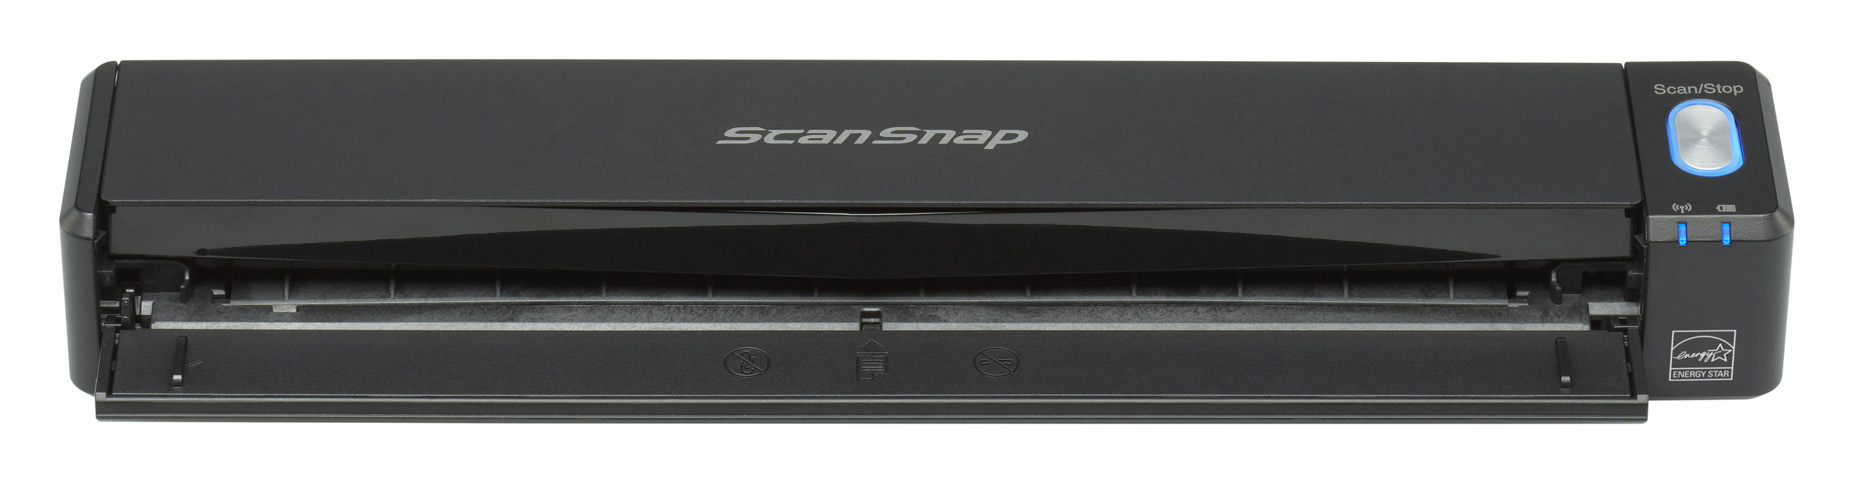 ScanSnap iX100 ADF 600dpi 11PPM USB 2.0